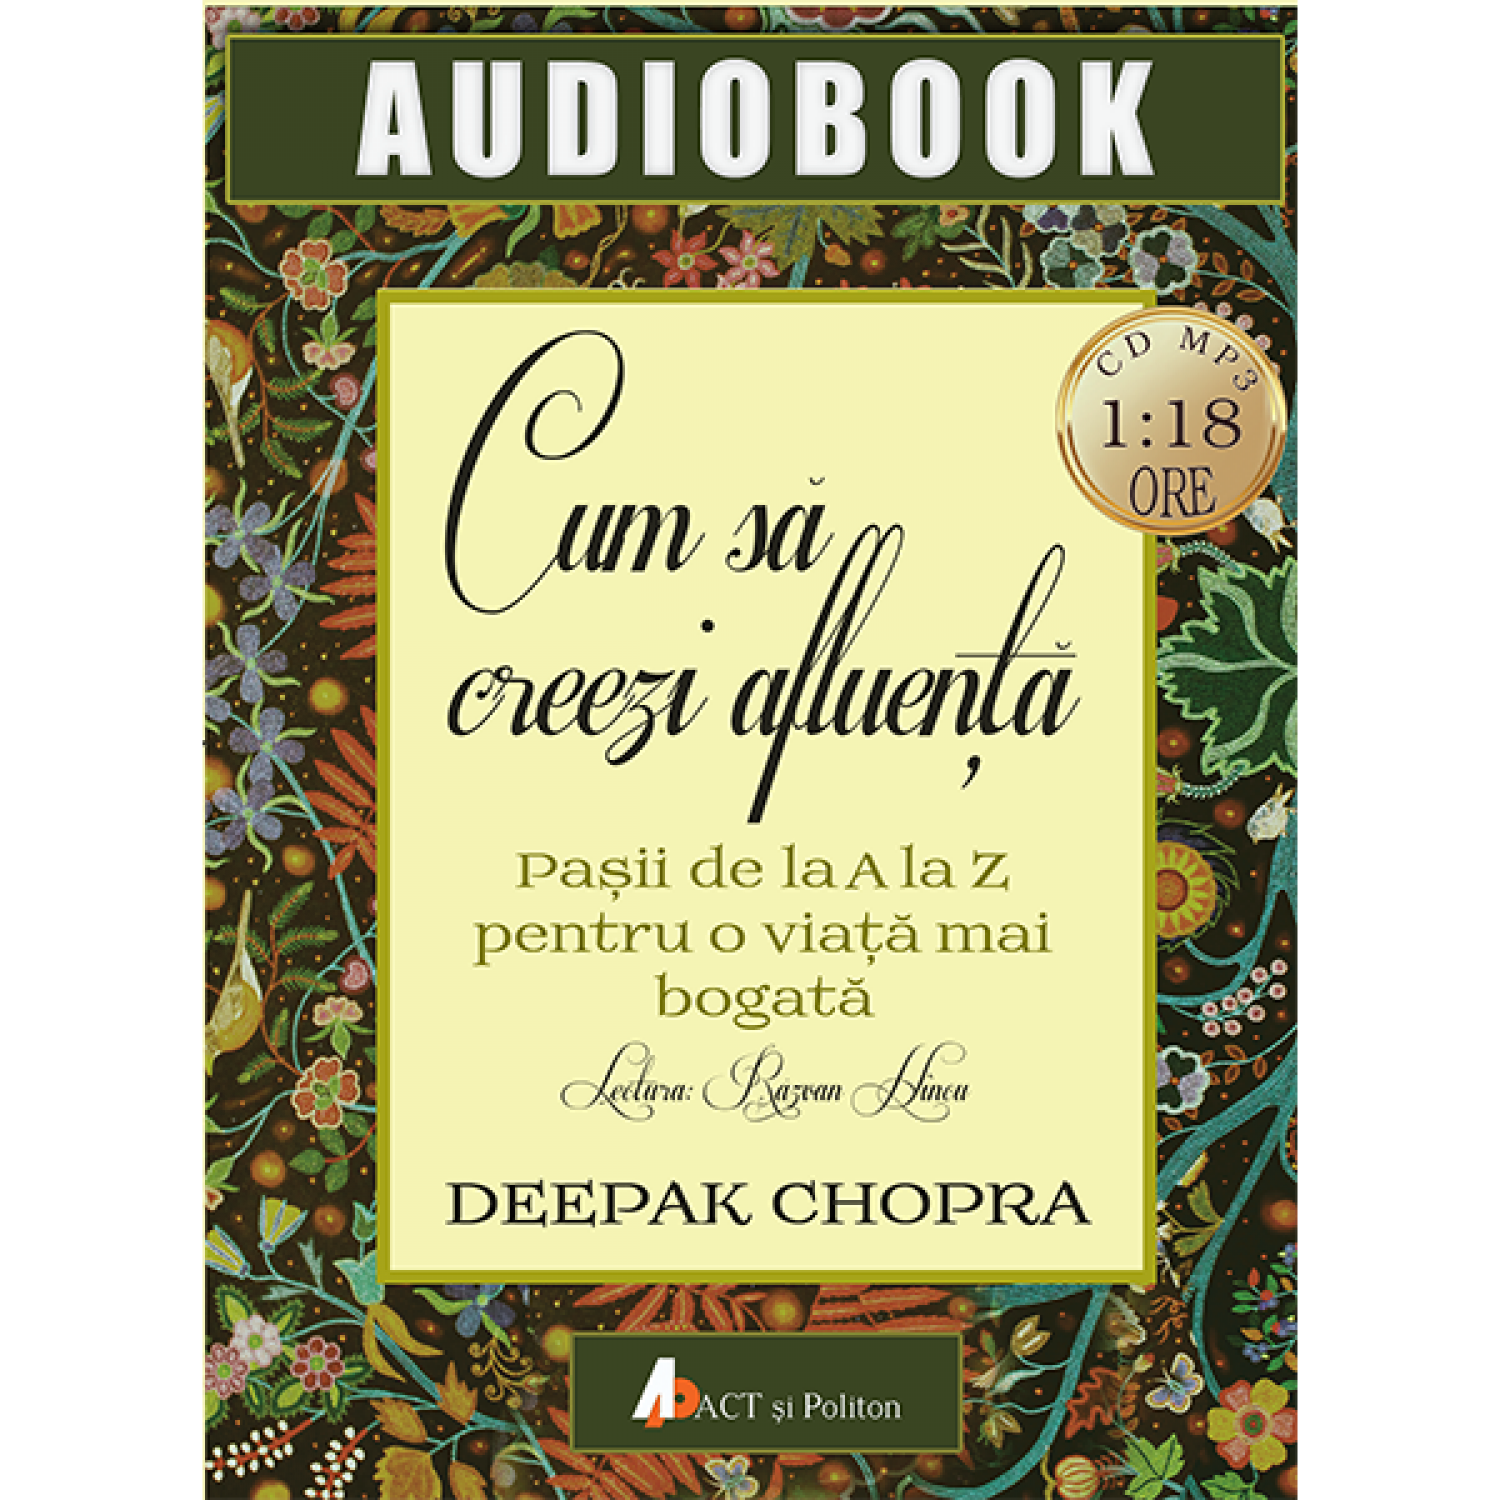 Cum sa creezi afluenta – Audiobook | Deepak Chopra de la carturesti imagine 2021